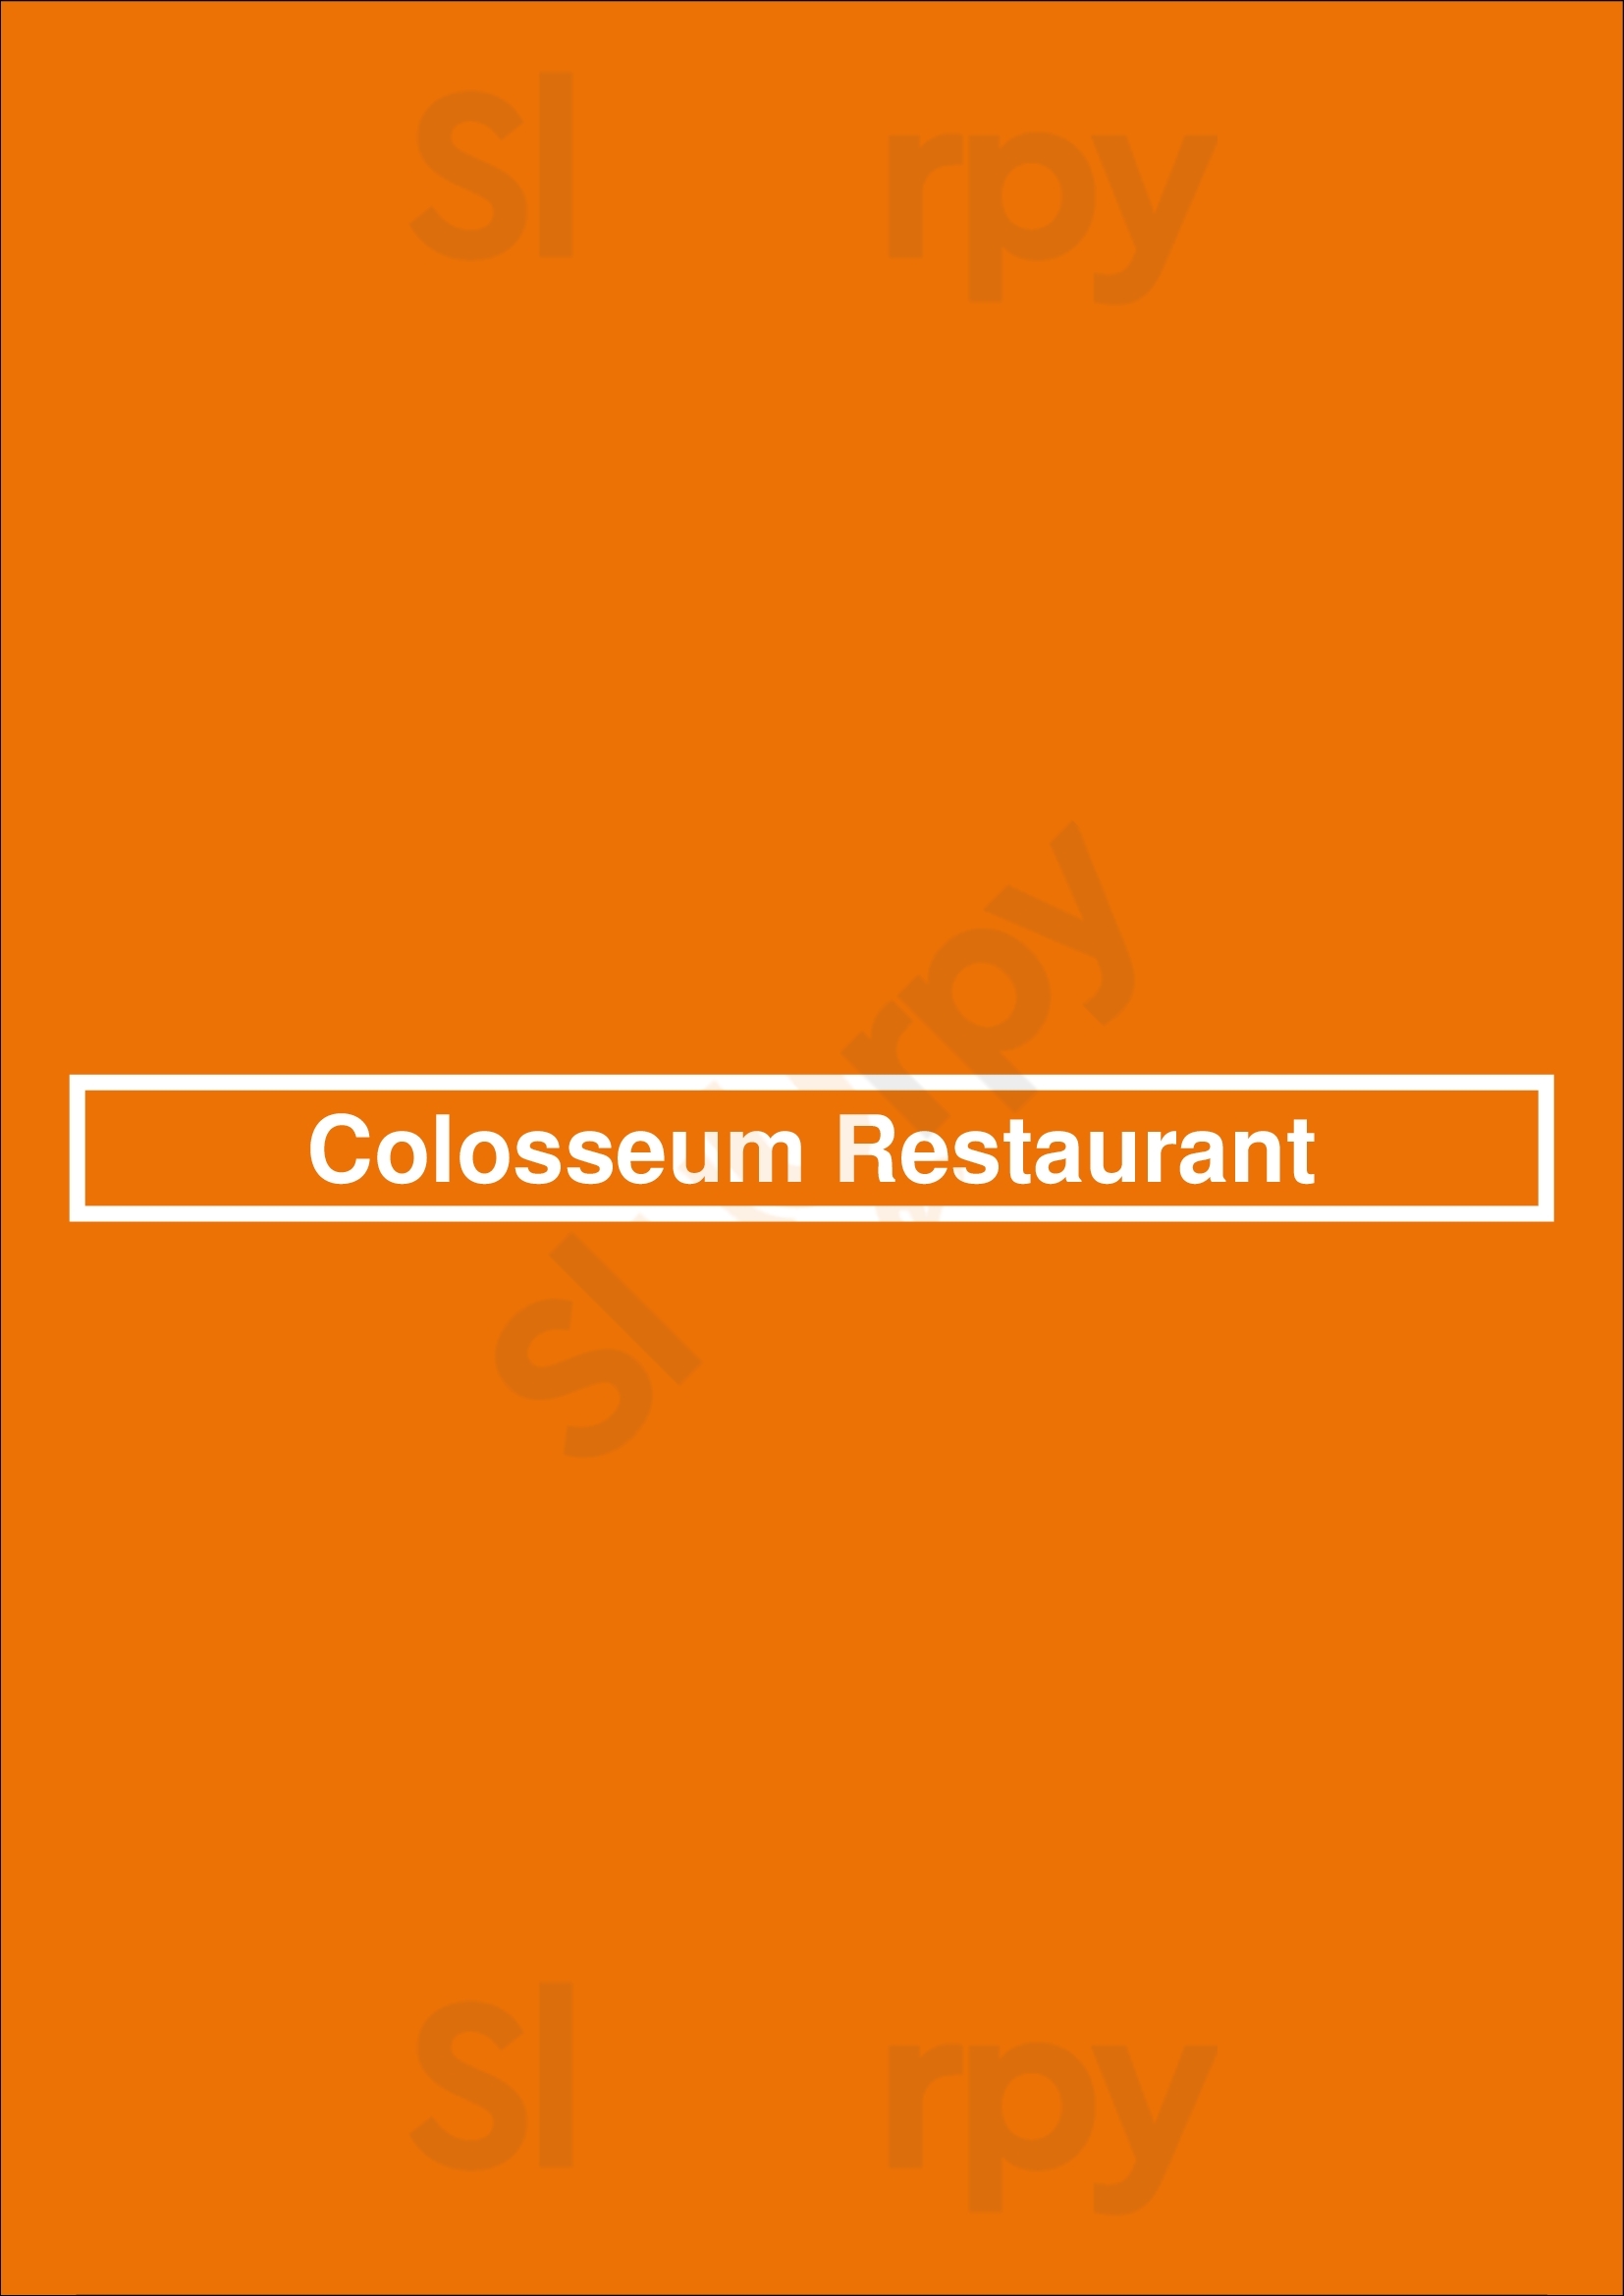 Colosseum Restaurant Salem Menu - 1